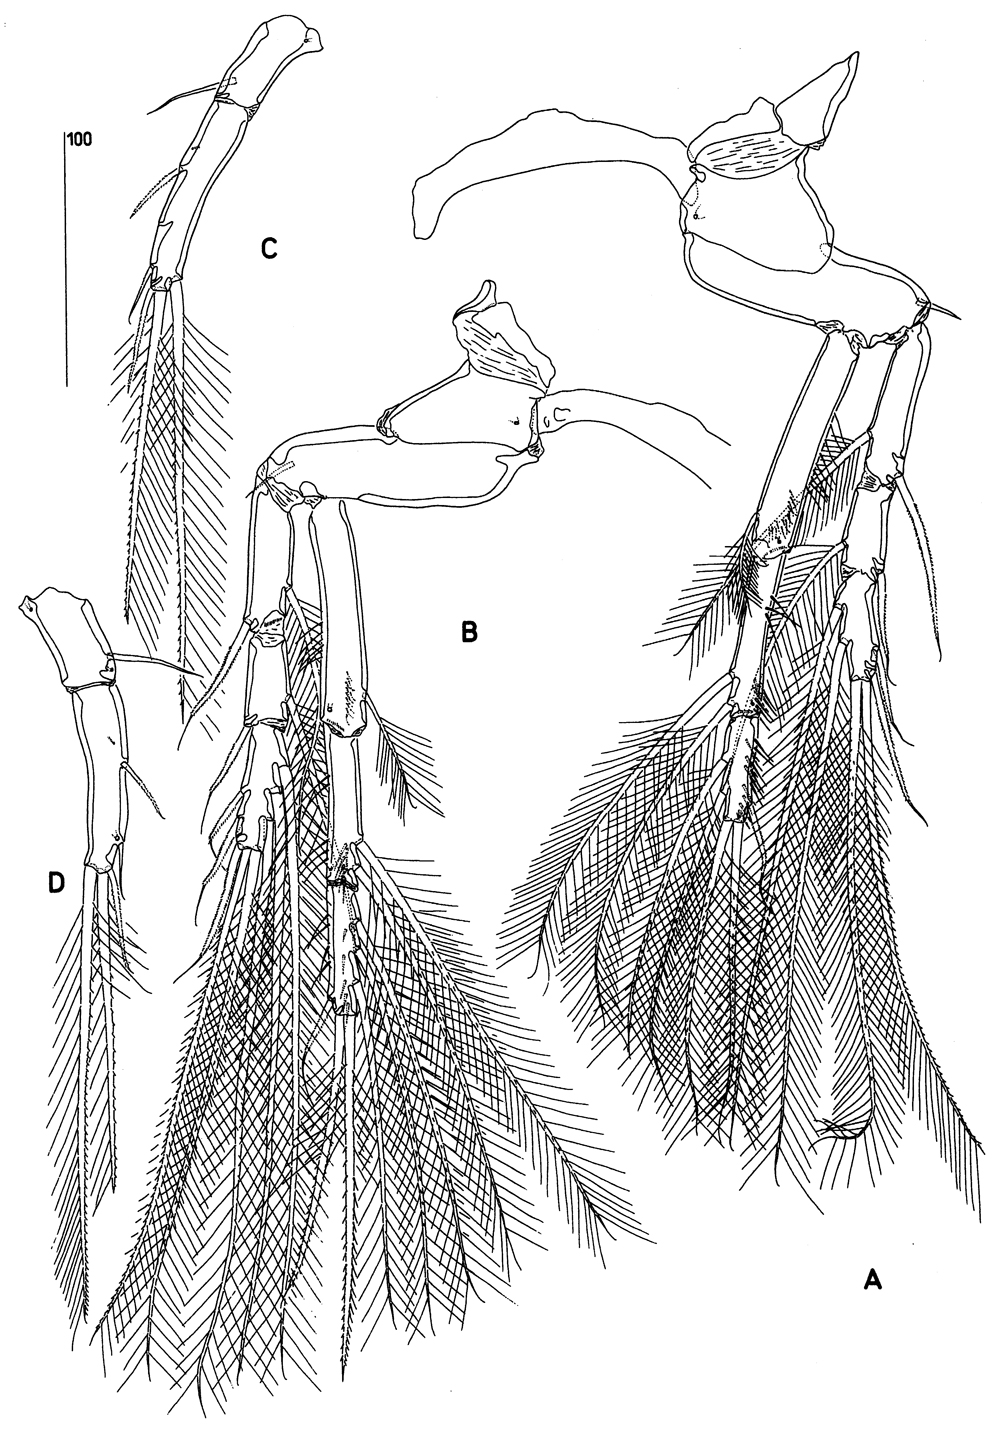 Species Goniopsyllus clausi - Plate 6 of morphological figures